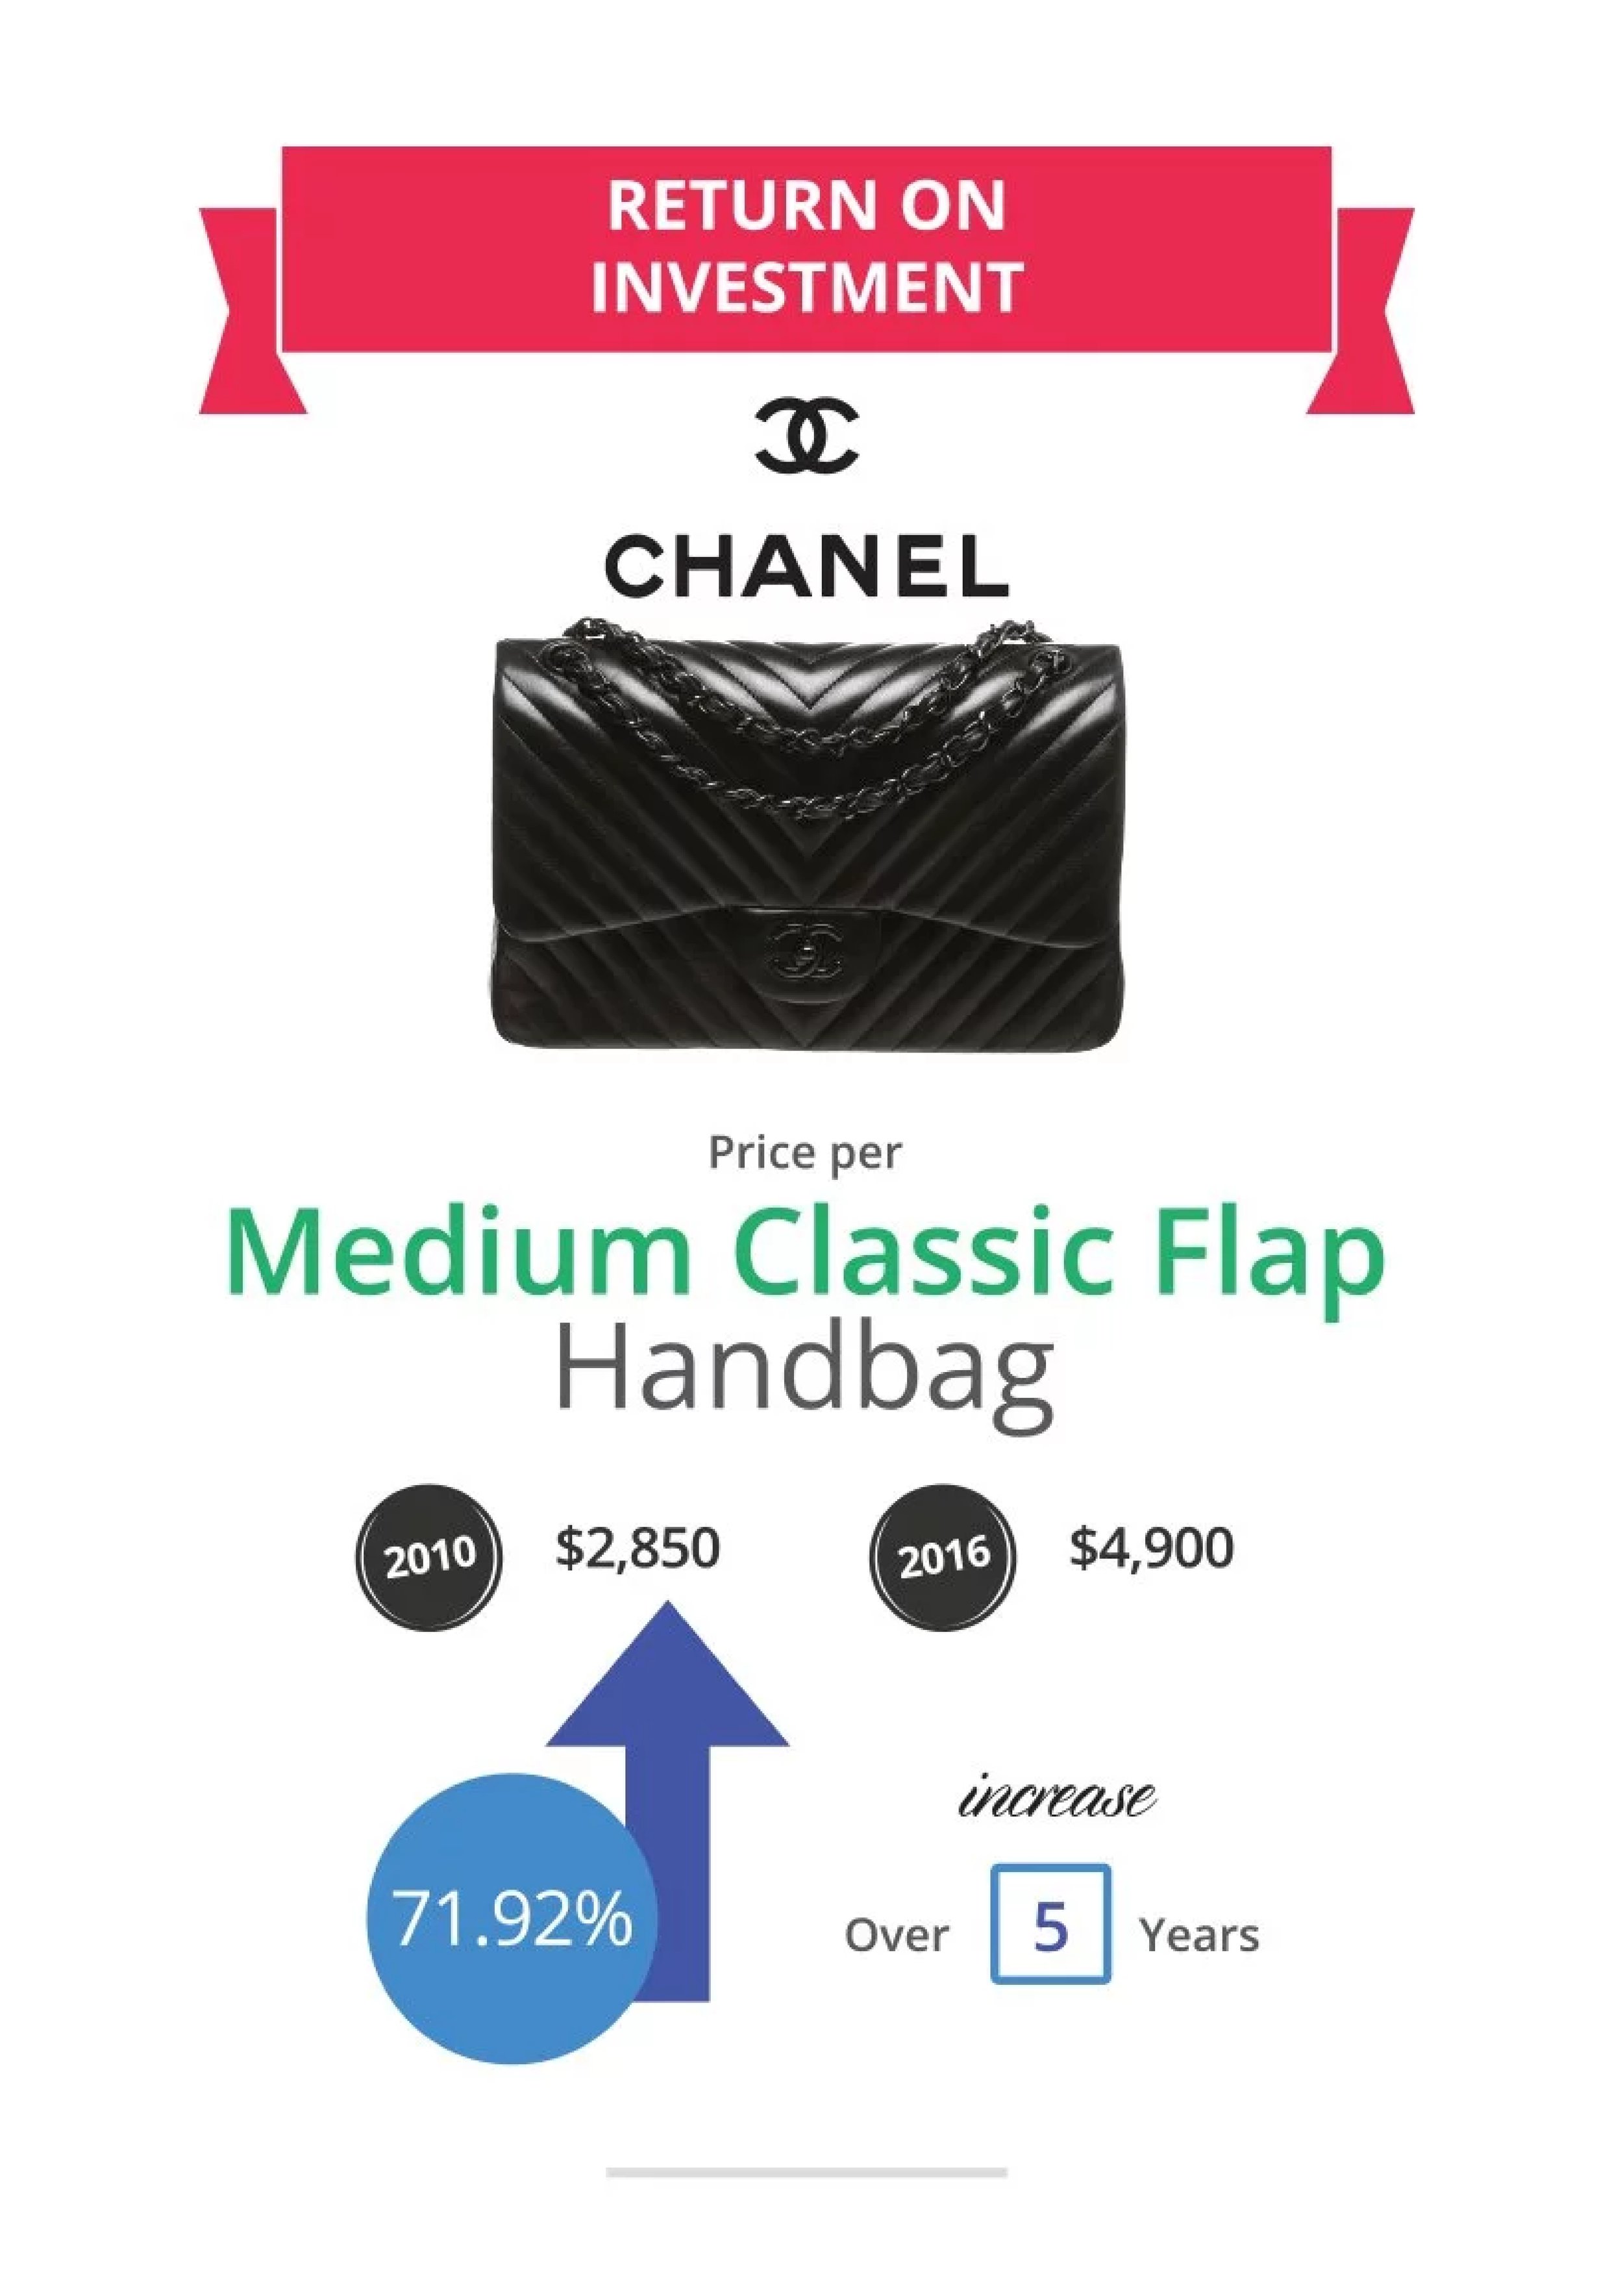 7. Chanel Bag Values Research Study - My Dreamz Closet